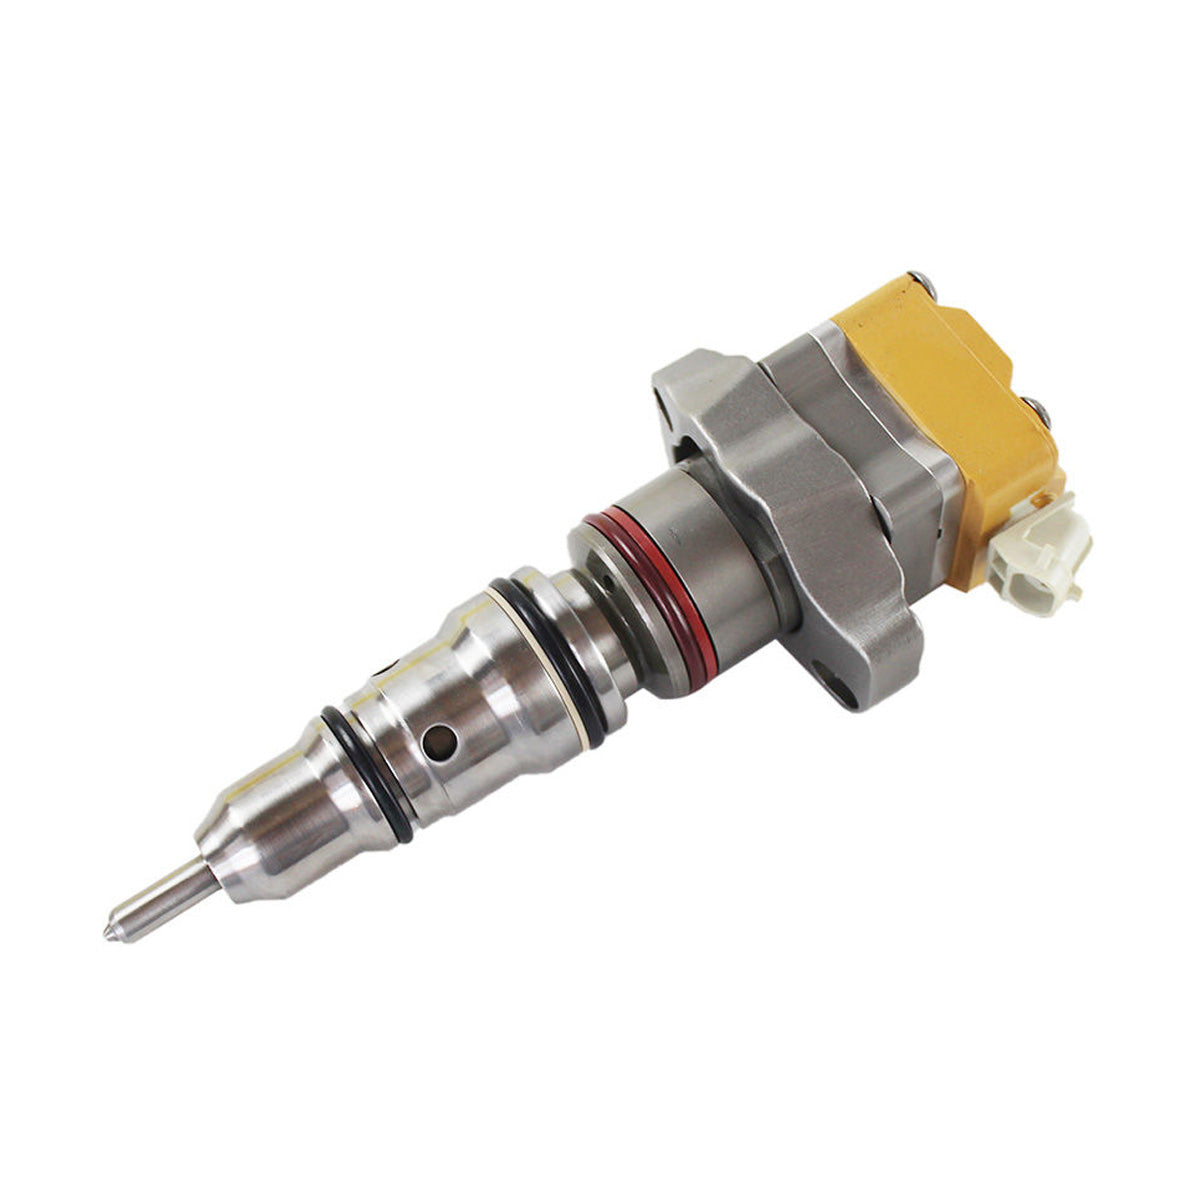 198-6605 1986605 Diesel Fuel Injector for Caterpillar C7 3126 3126B Engine - Sinocmp